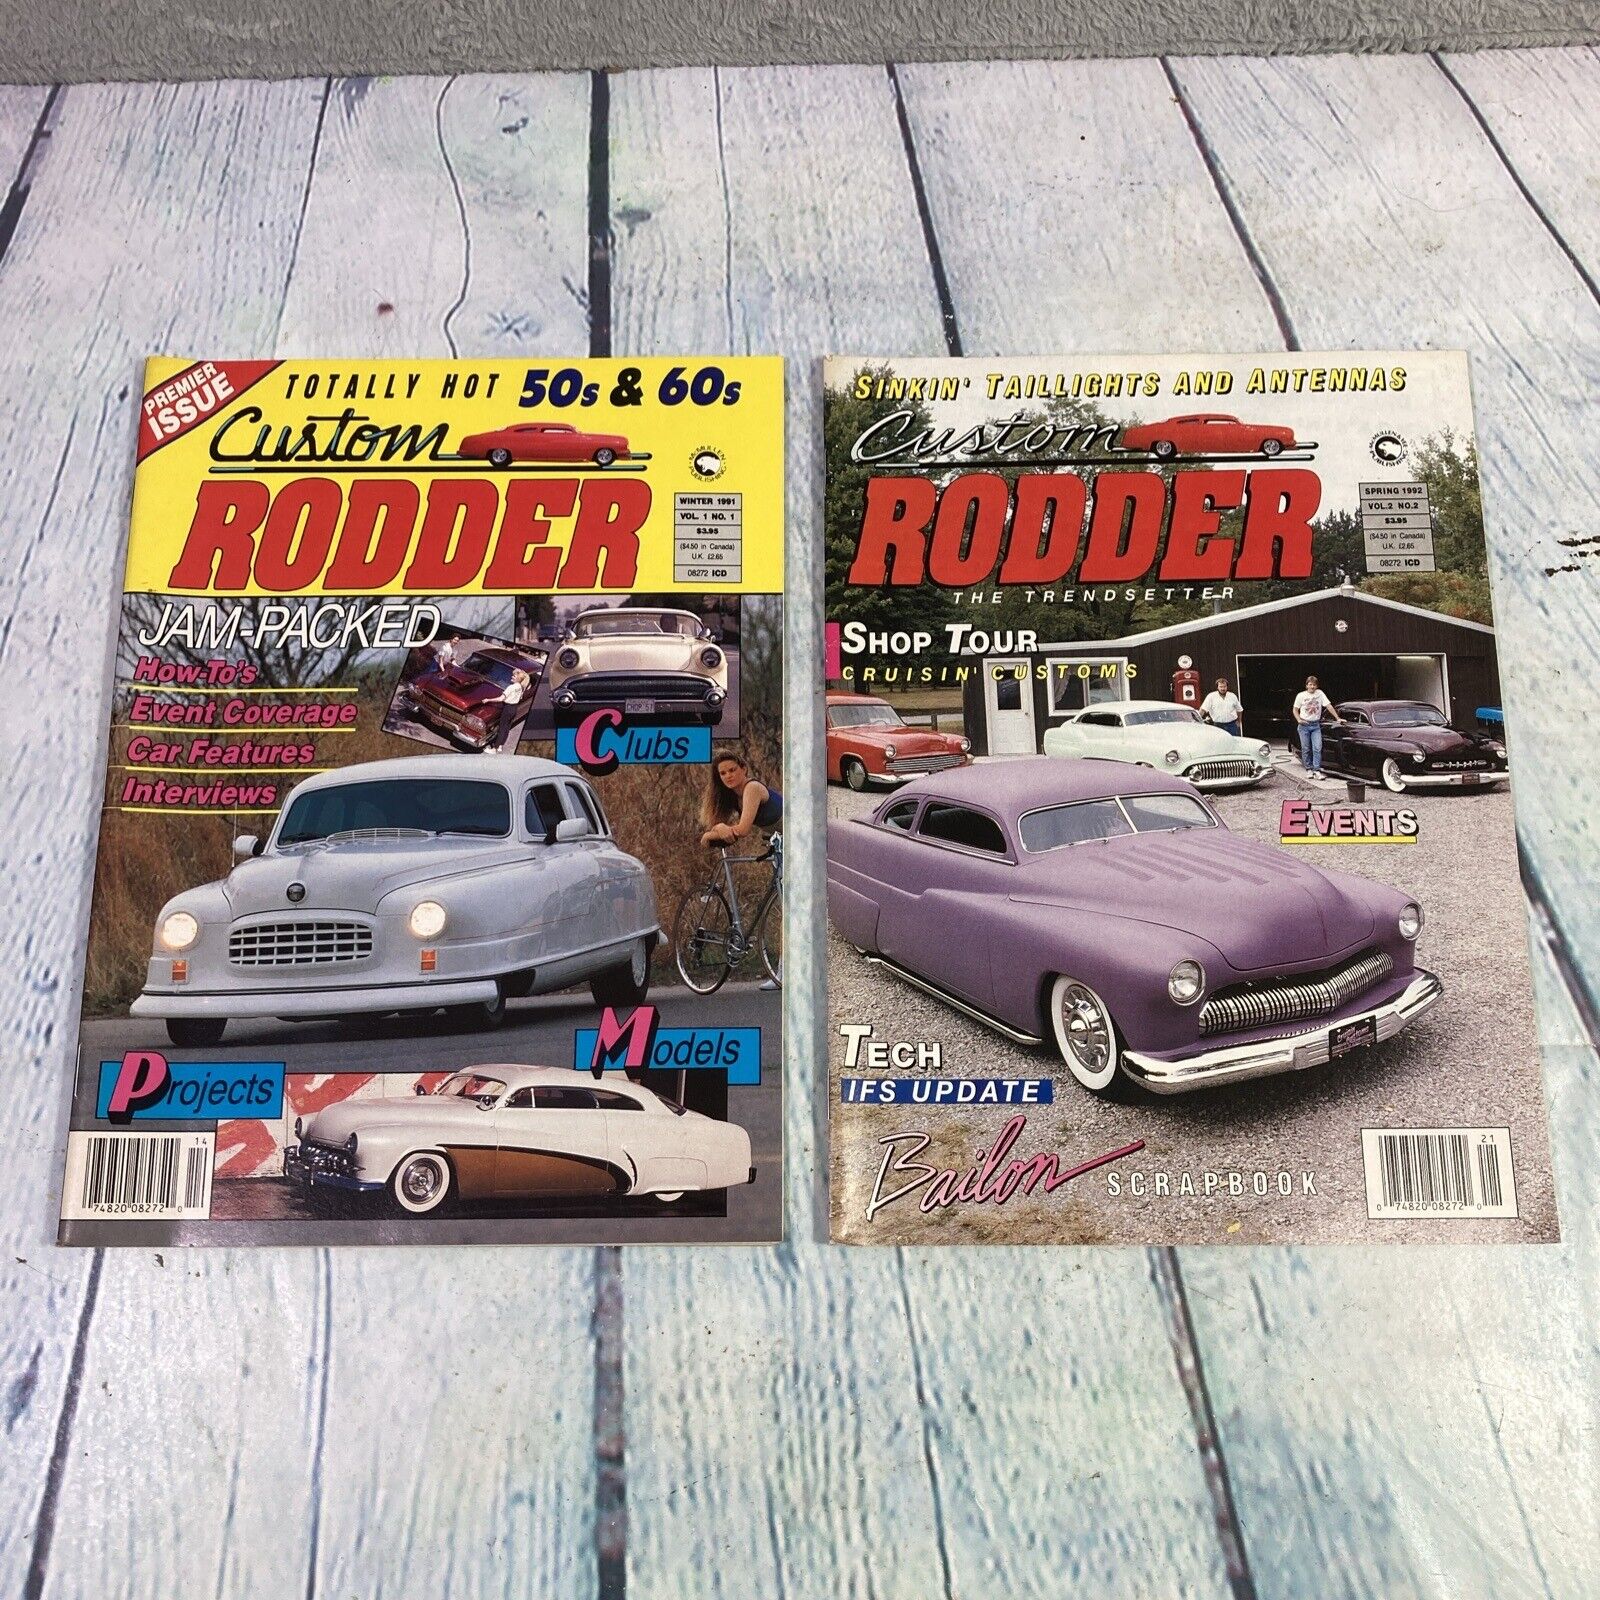 2 Vintage 1991-1992 Custom Rodder Magazines Premiere #1 #2 Hot Rod Cars Kustom